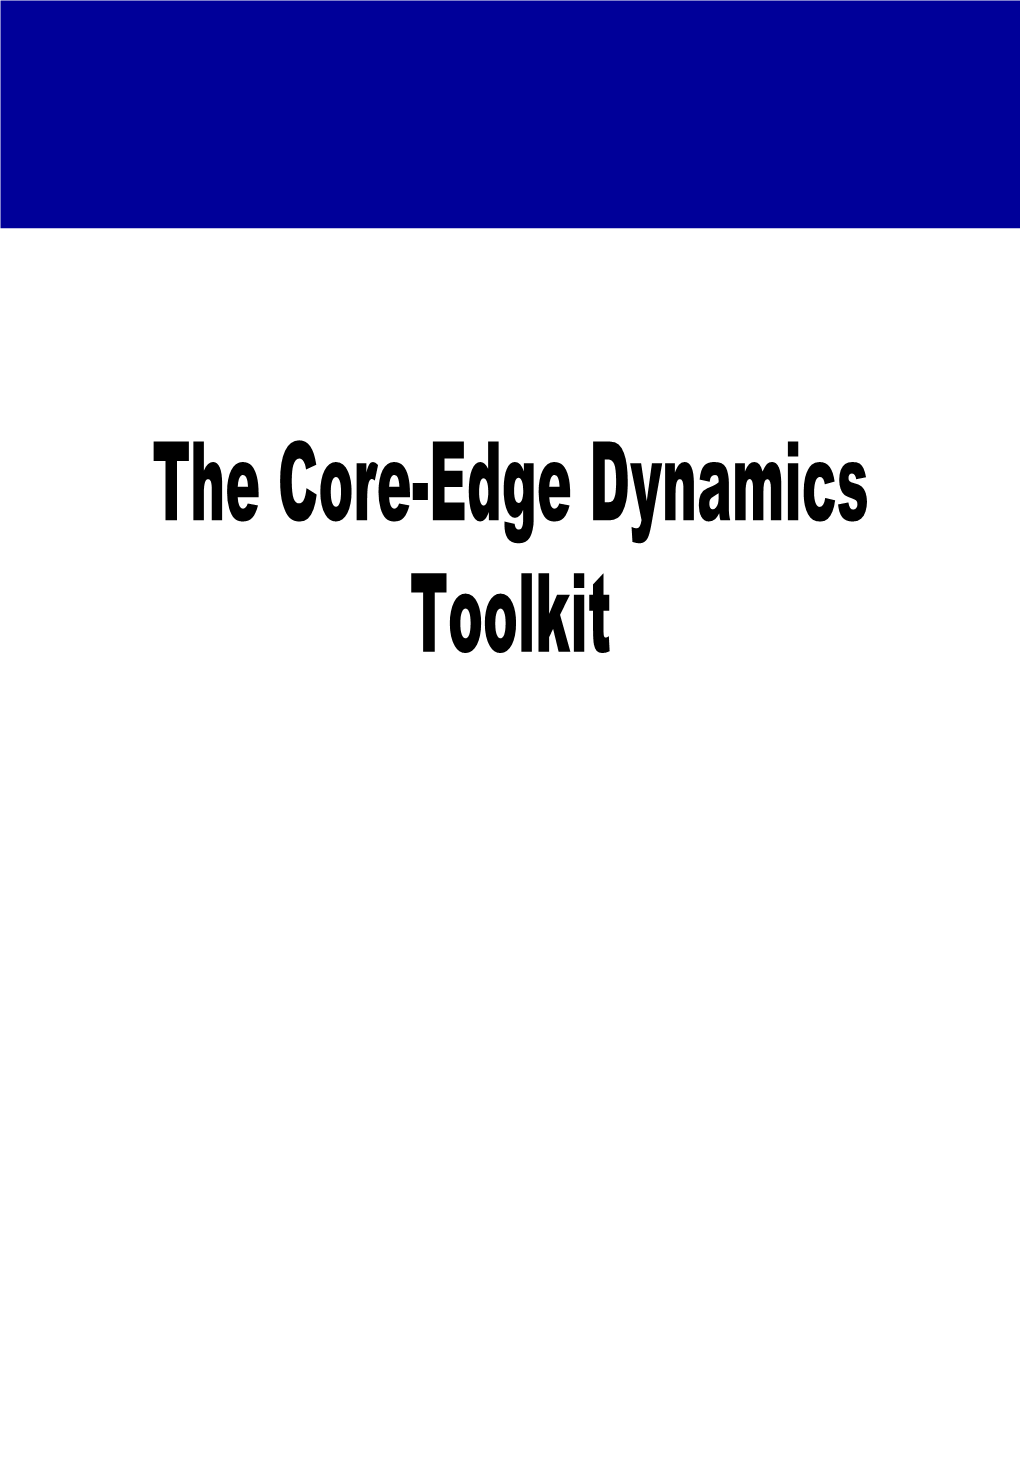 The Core-Edge Toolkit